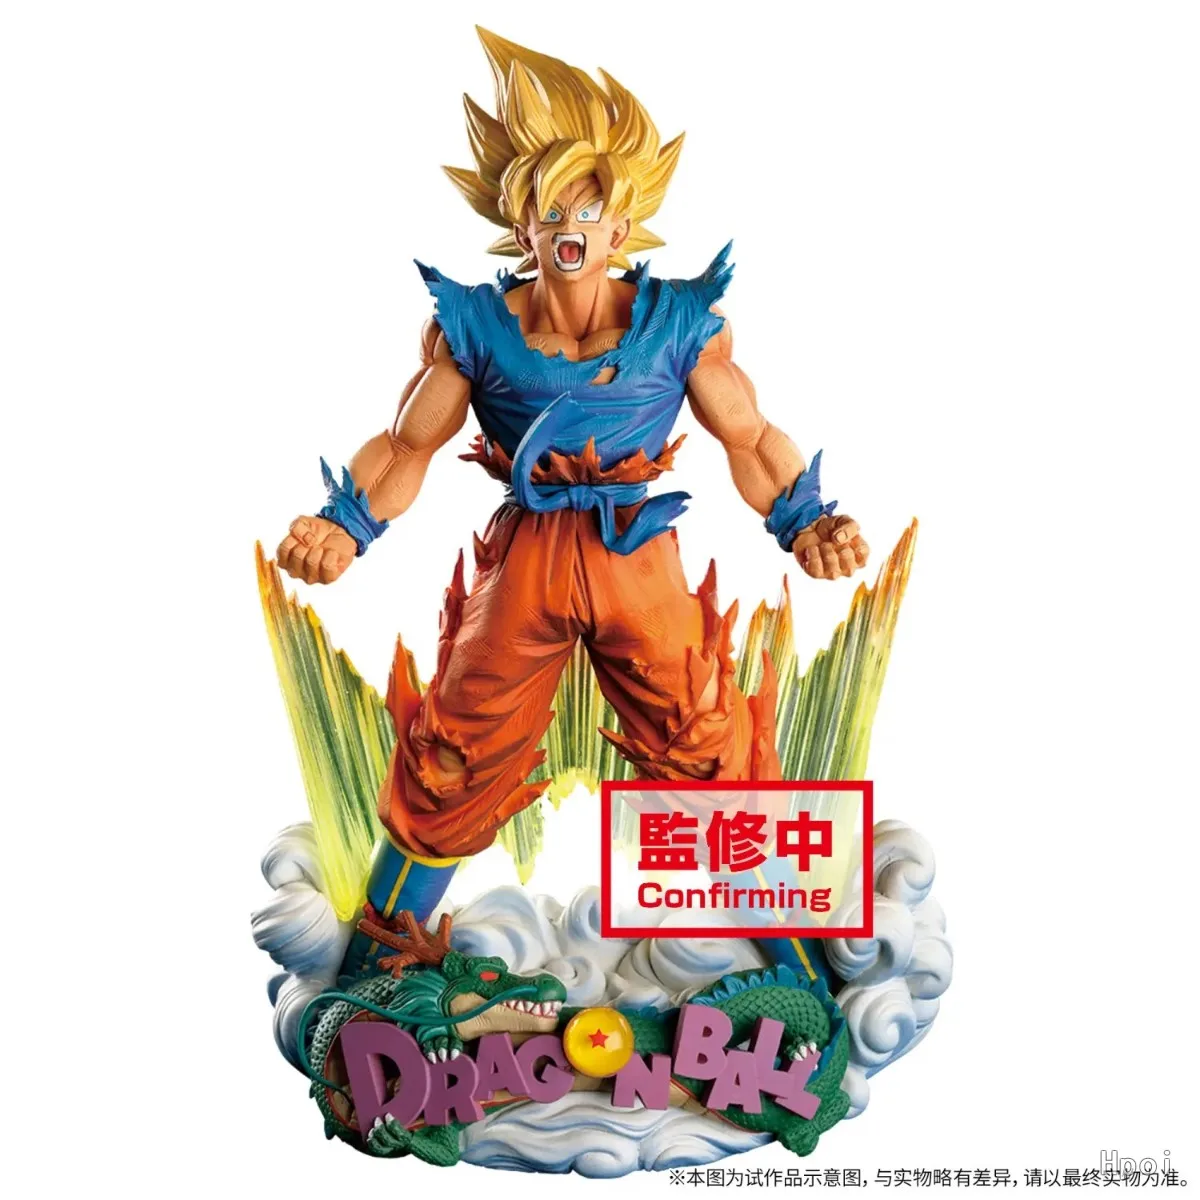 Original Anime Dragon Ball Super Son Goku Free Ultimate Intent Kung Fu Kamepai Qigong Trigger Action Figure Anime Model Toy Gift